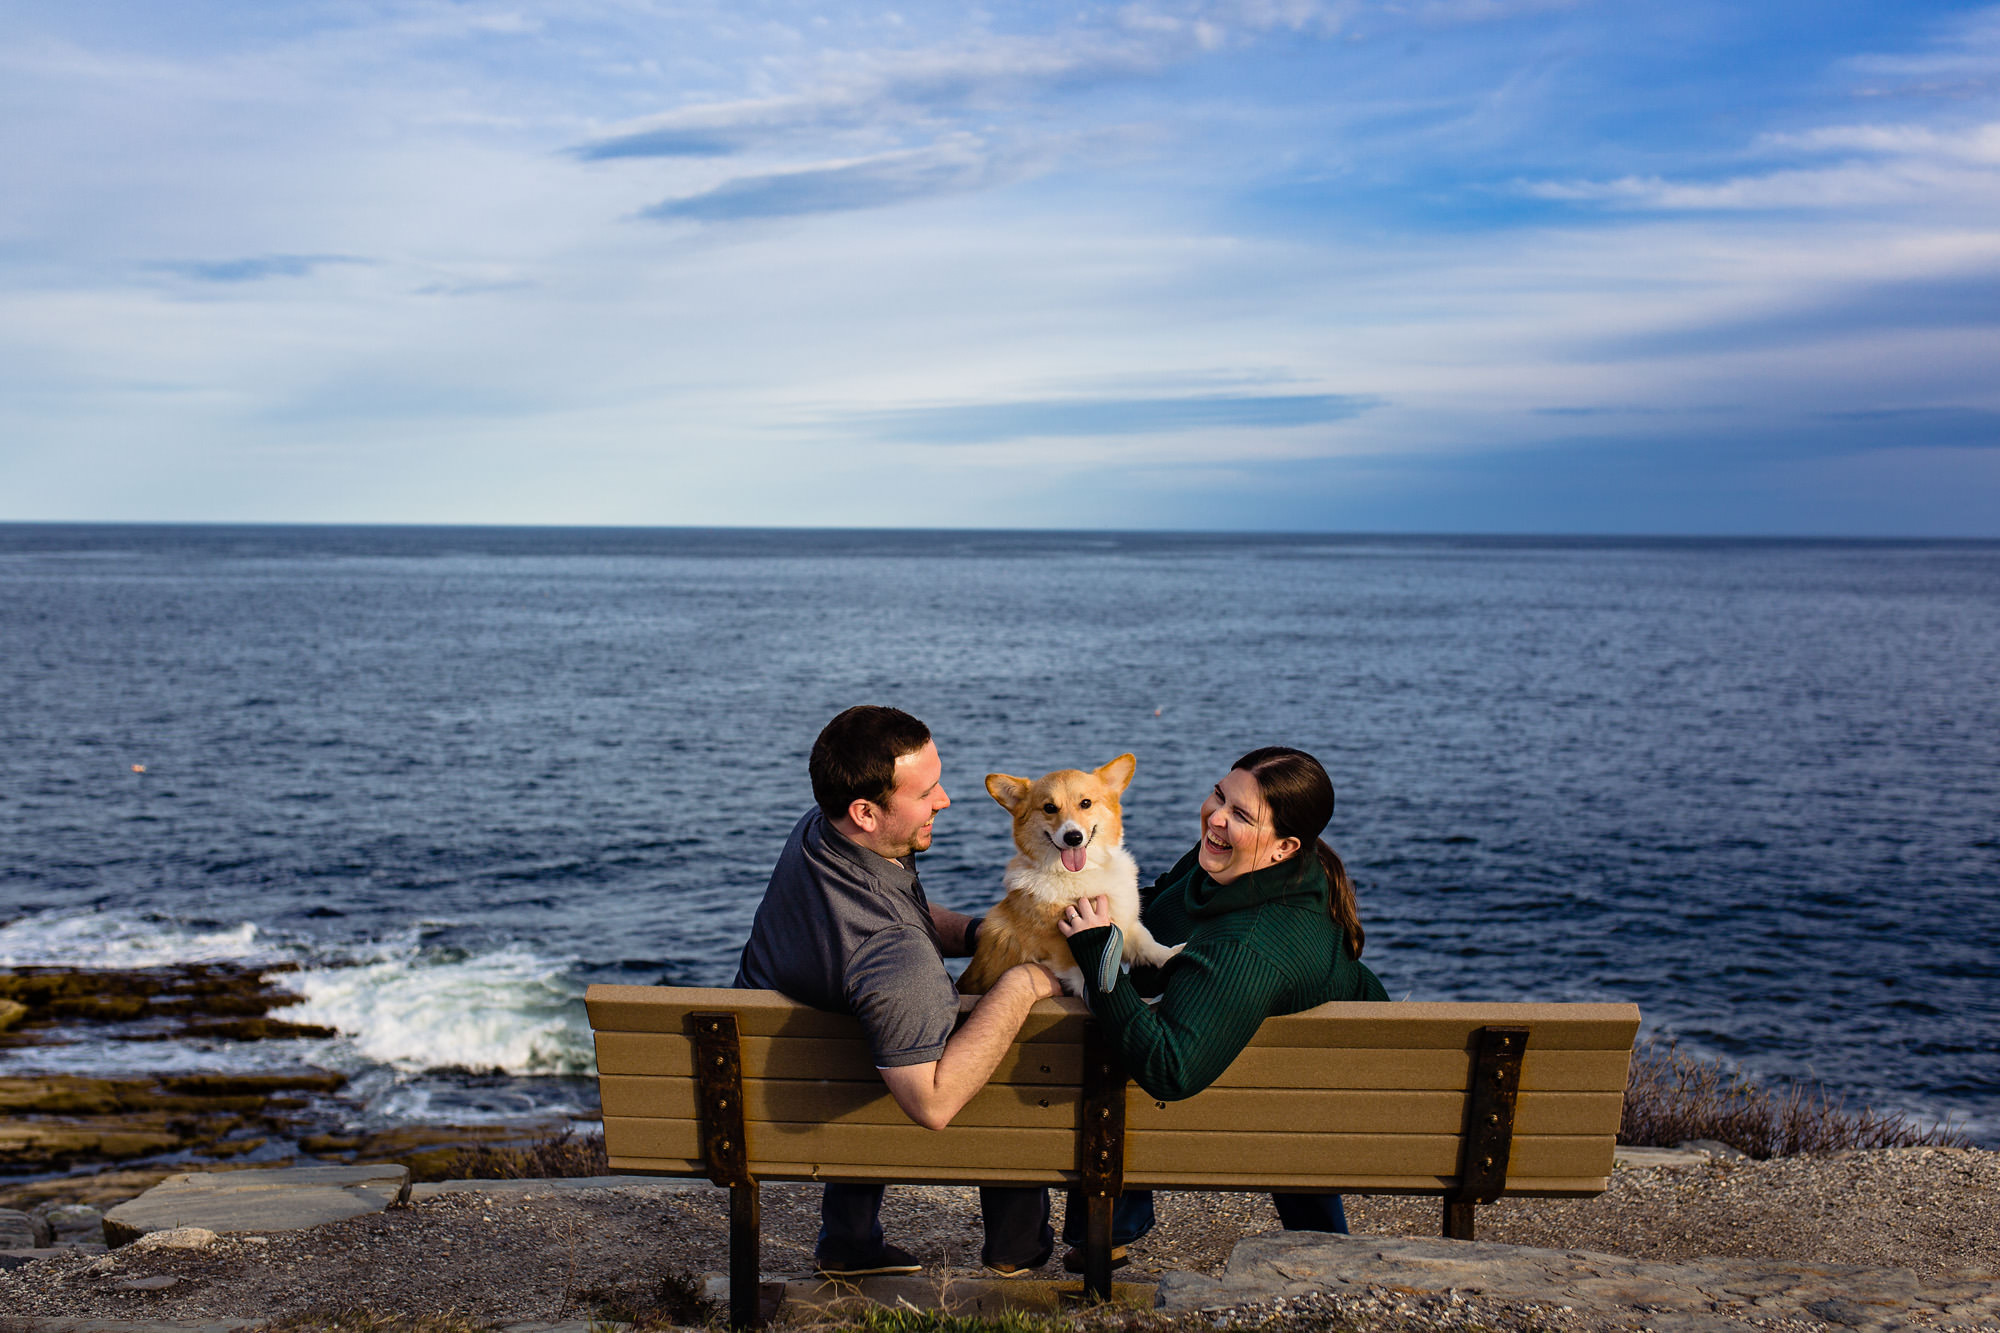 Engagement portraits taken in Cape Elizabeth, Maine